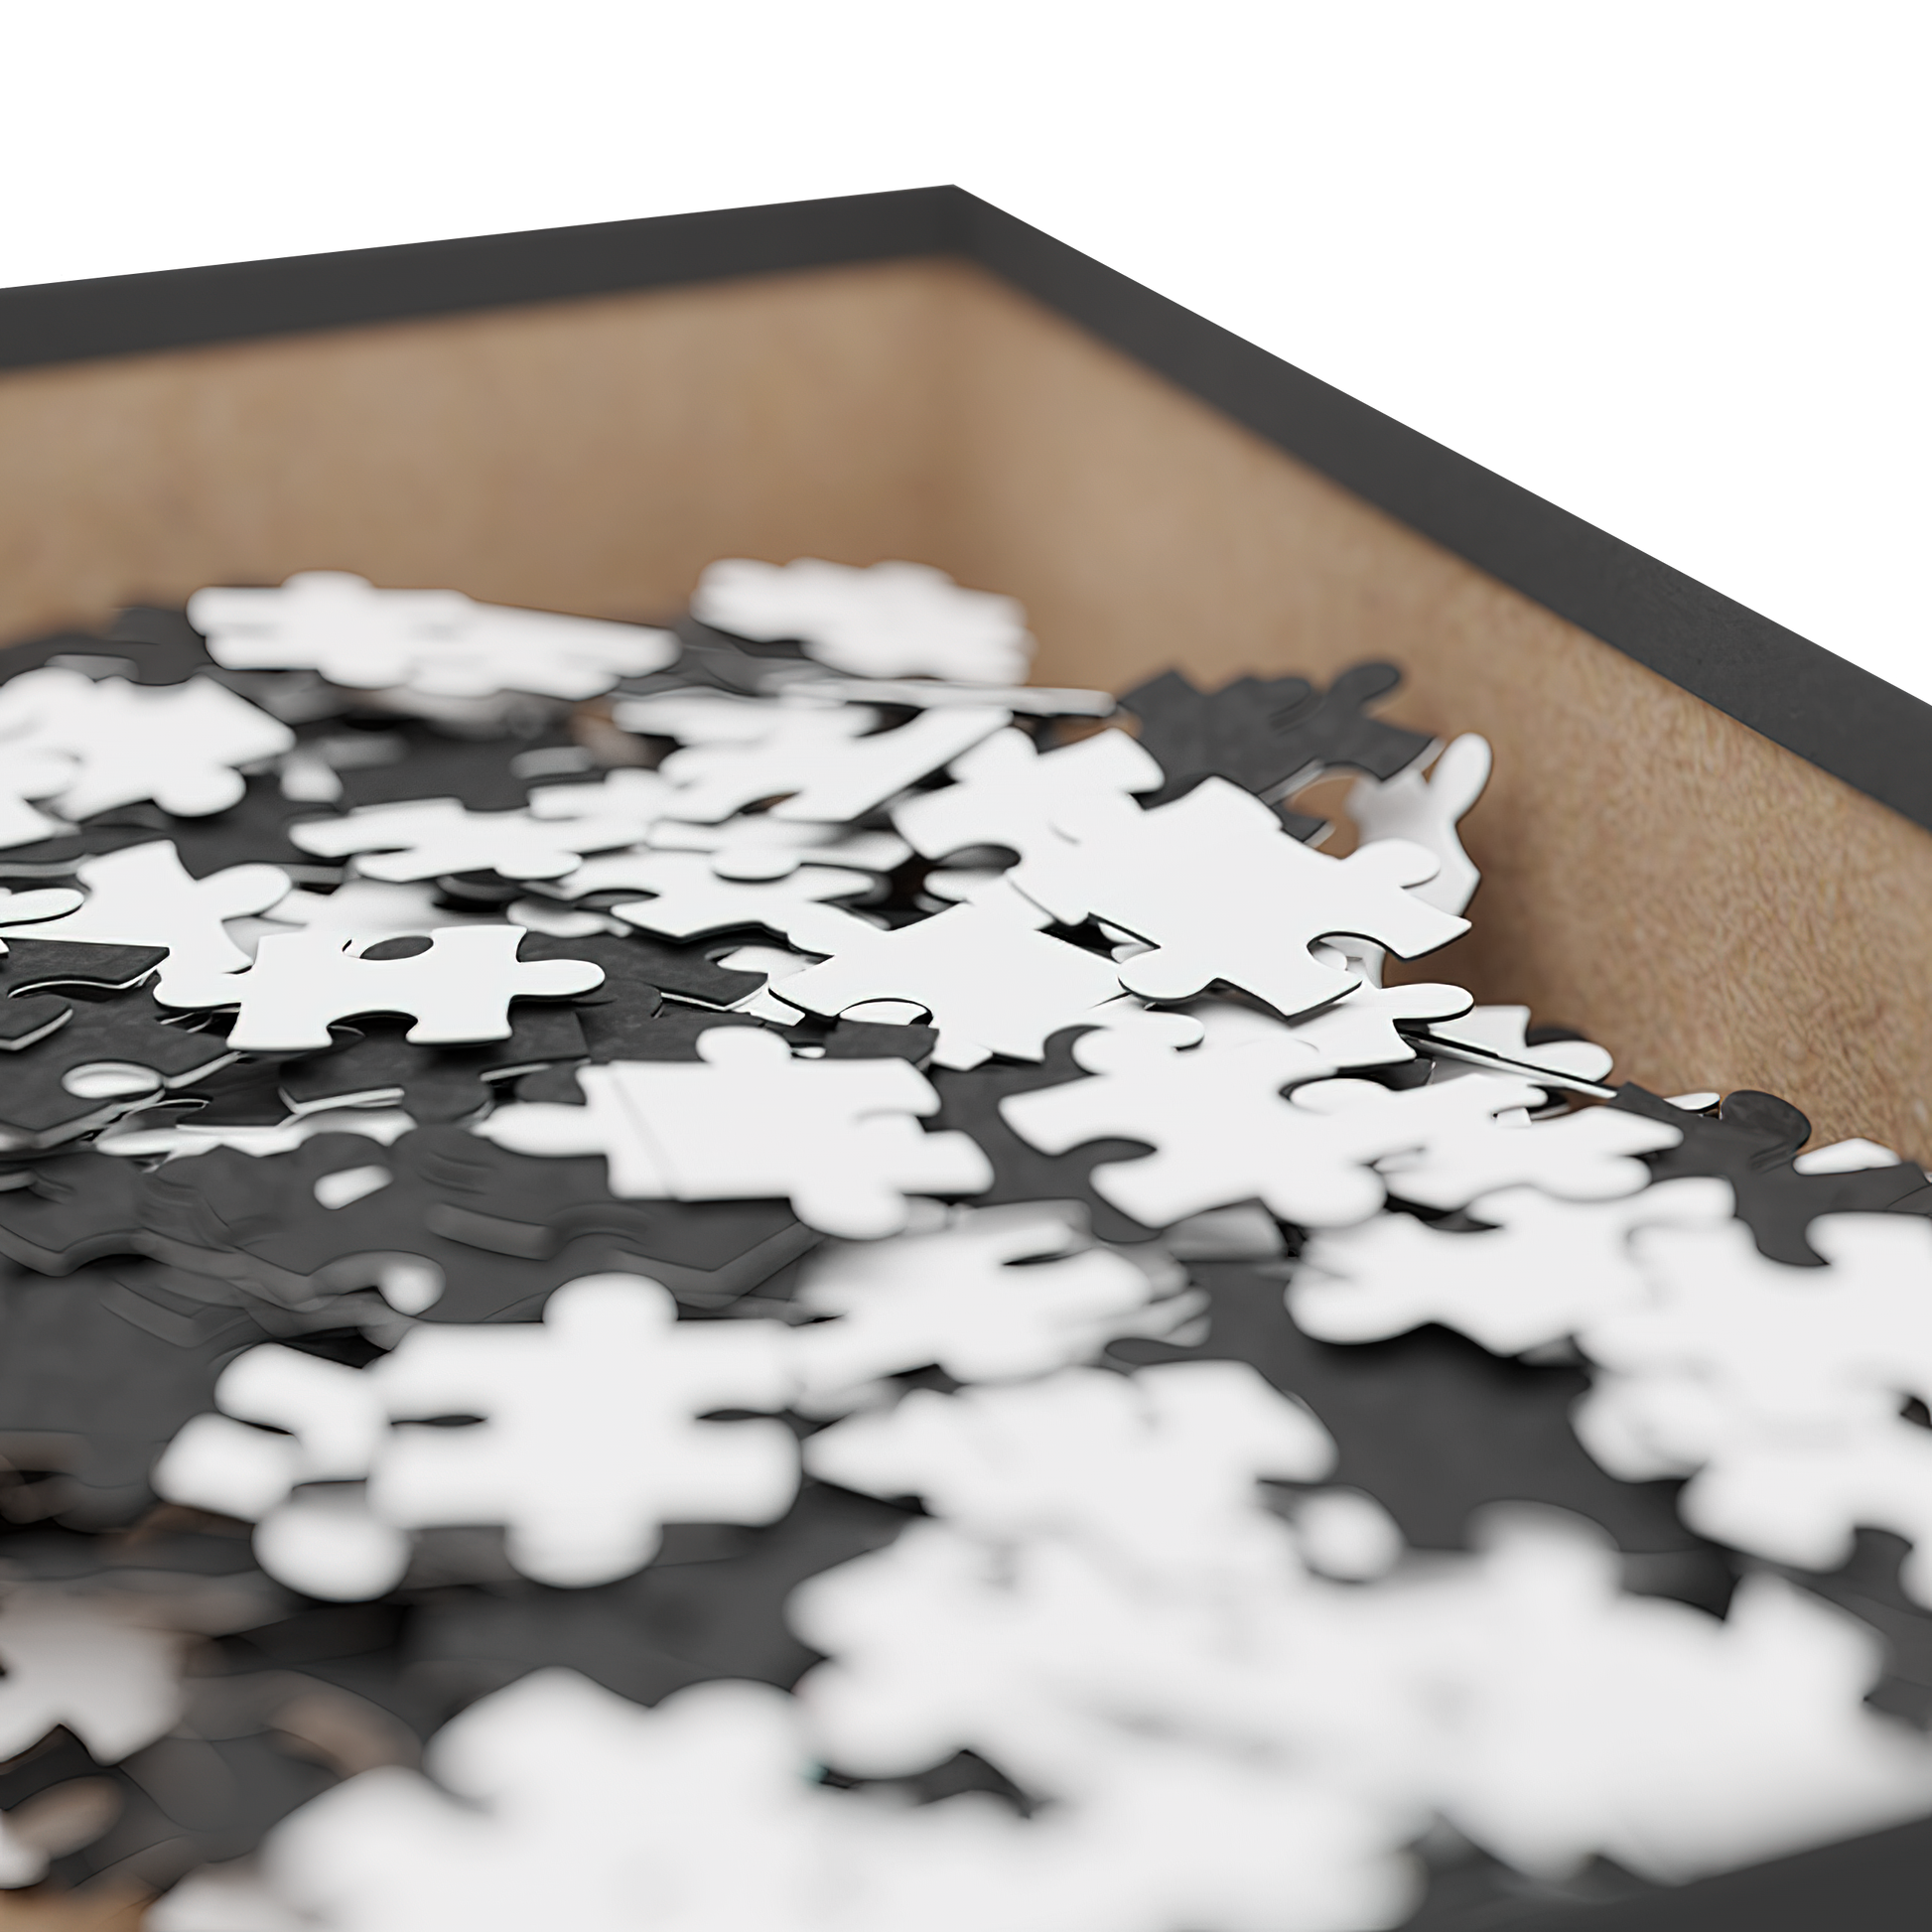 Turbulence - Premium Jigsaw Puzzle, Ornate, Detailed - Multiple Sizes Available